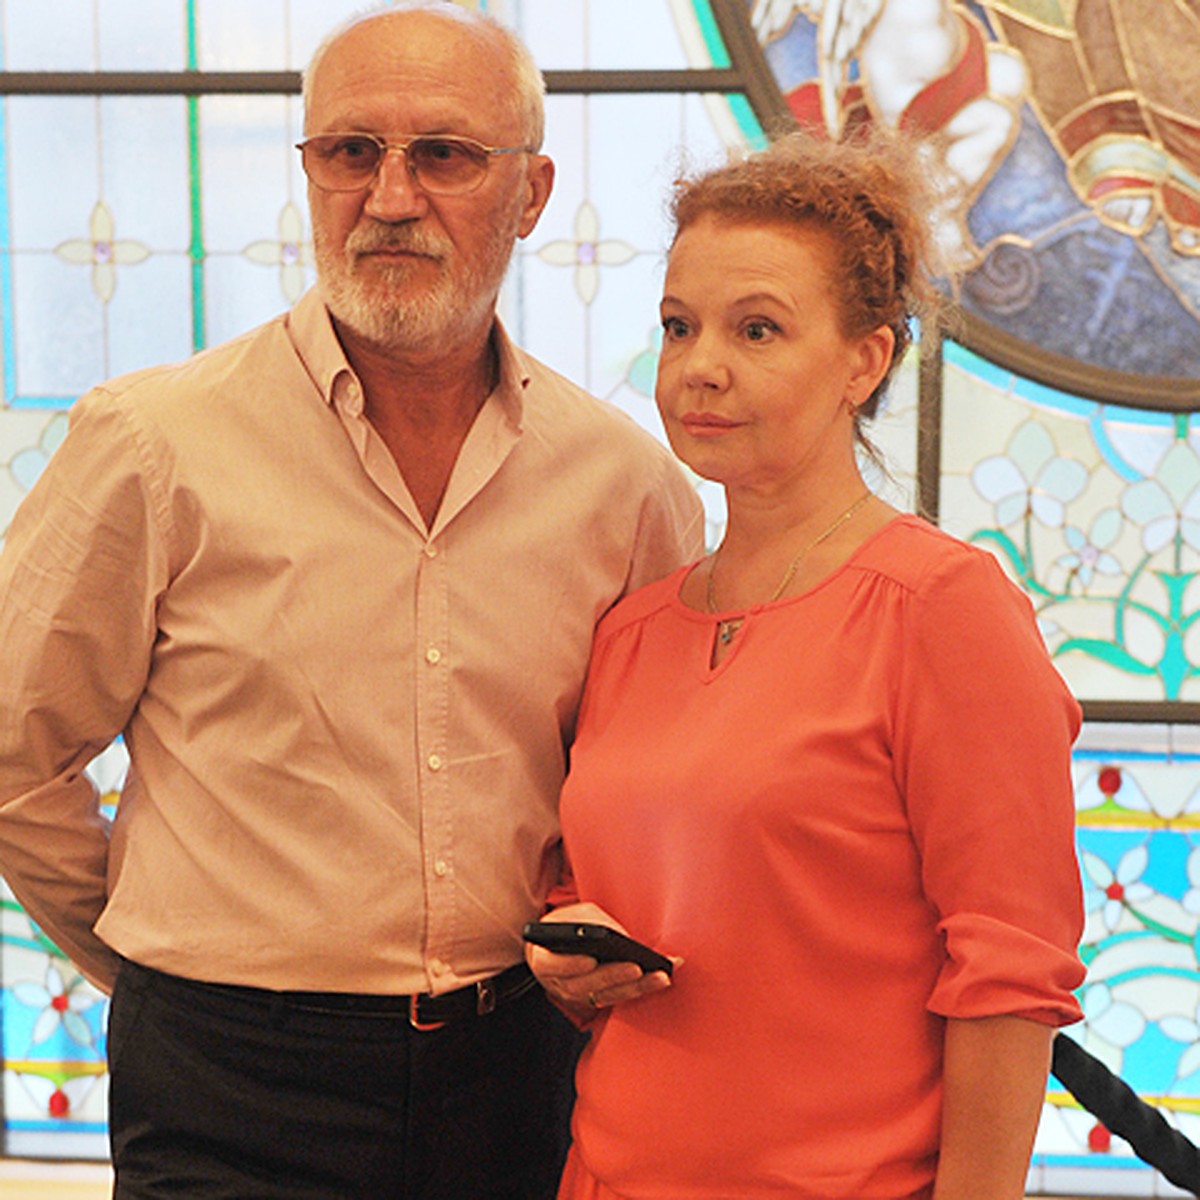 Татьяна Абрамова и Юрий Беляев